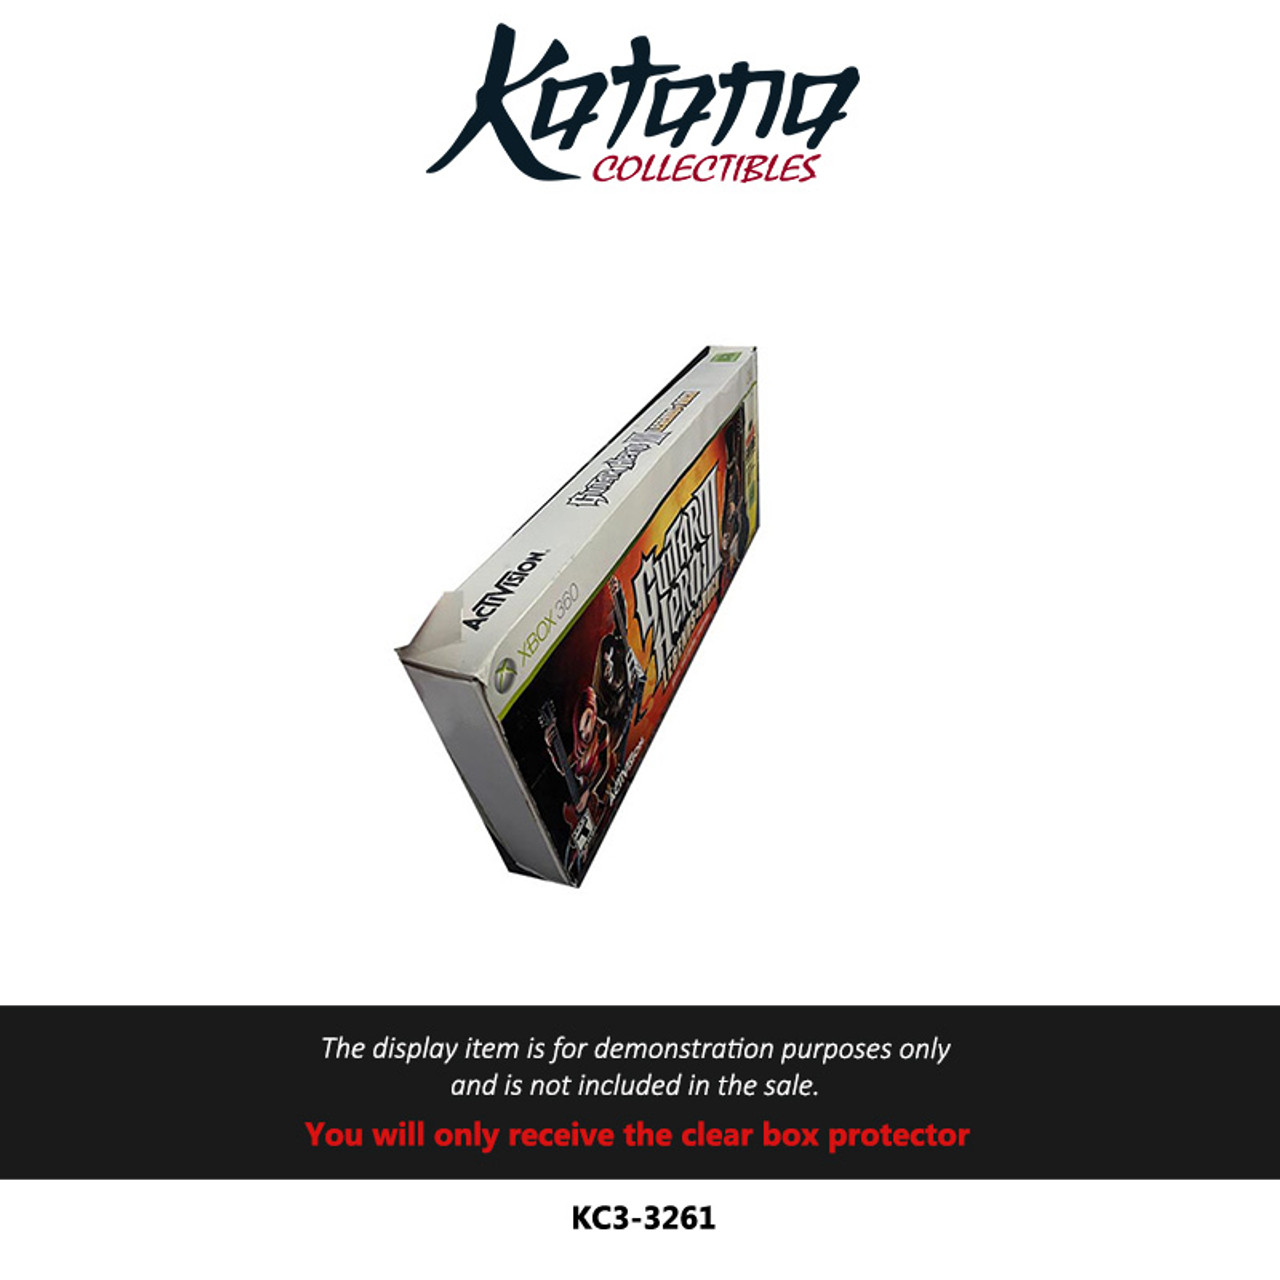 Katana Collectibles Protector For Guitar Hero 3 - Game and Guitar Controller